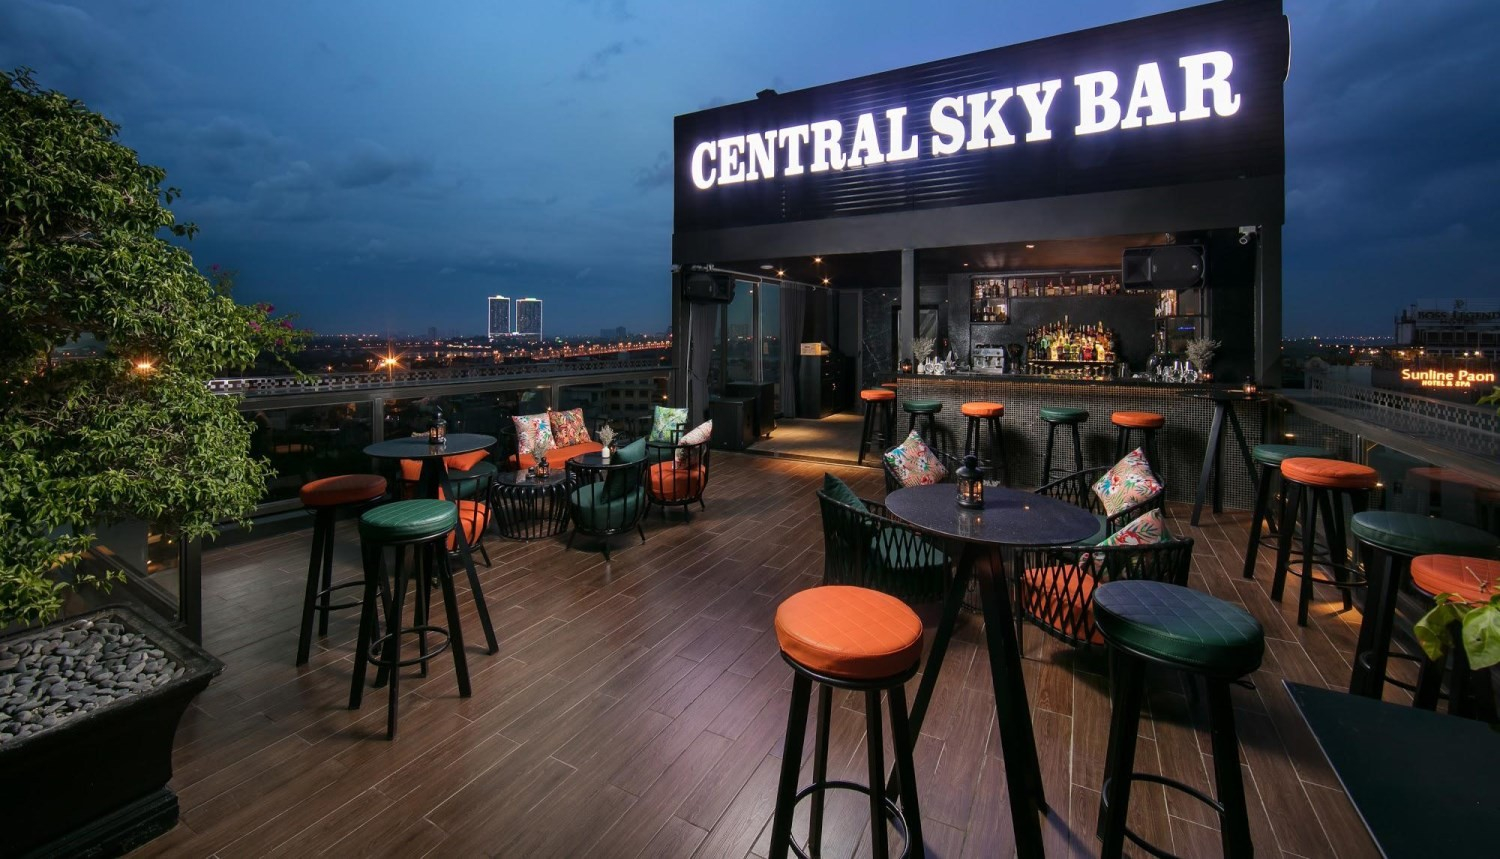 Central Sky Bar - Delicacy Central Hotel ở Quận Hoàn Kiếm, Hà Nội ...